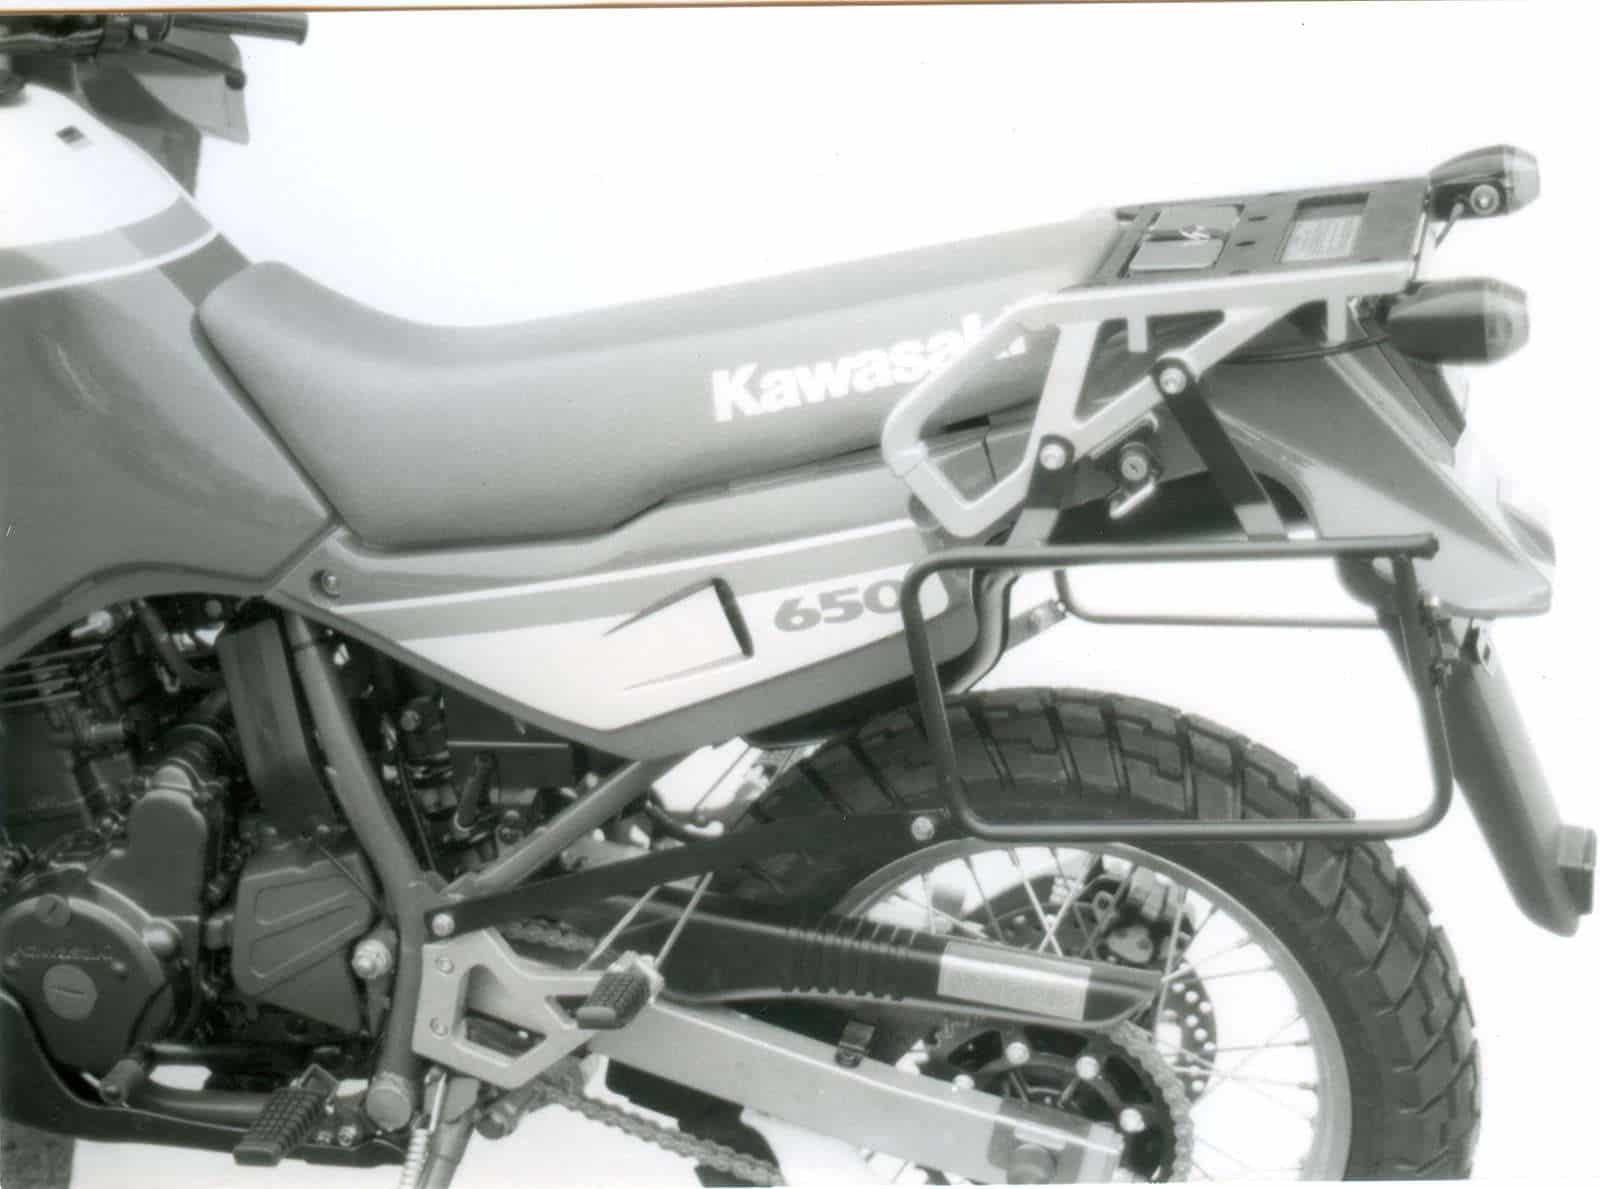 Sidecarrier permanent mounted black for Kawasaki KLR 650 Tengai (1989-1991)